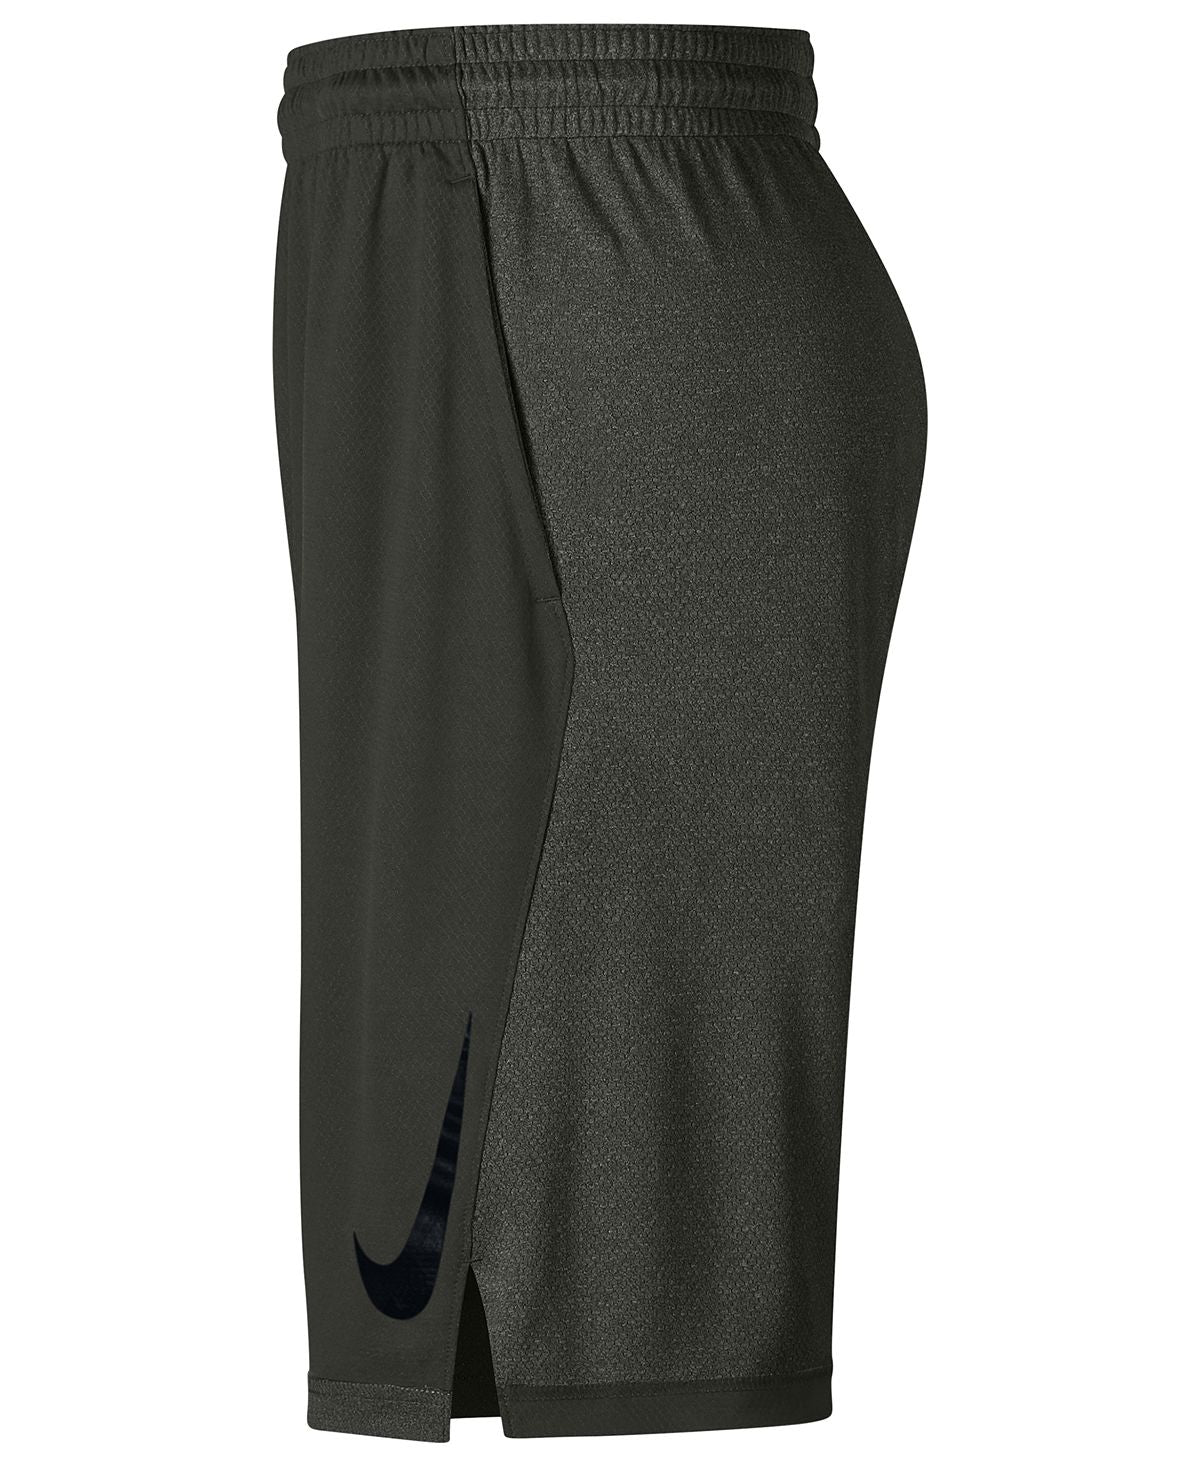 Nike Dry Basketball 11" Shorts Sequoia